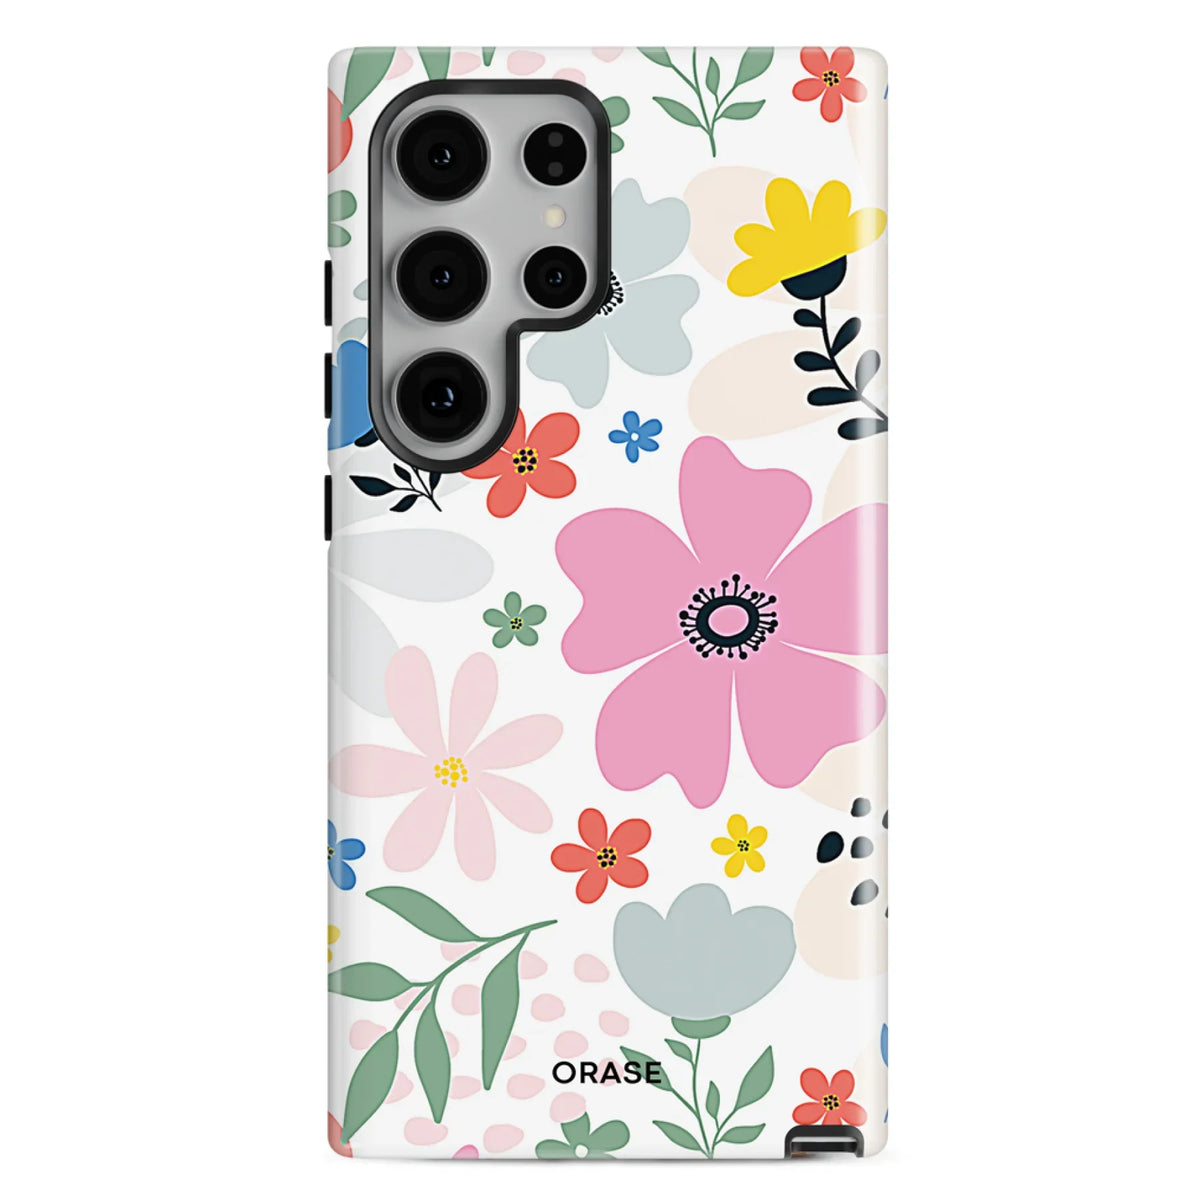 Flower Power Samsung Case - Galaxy S21 Ultra